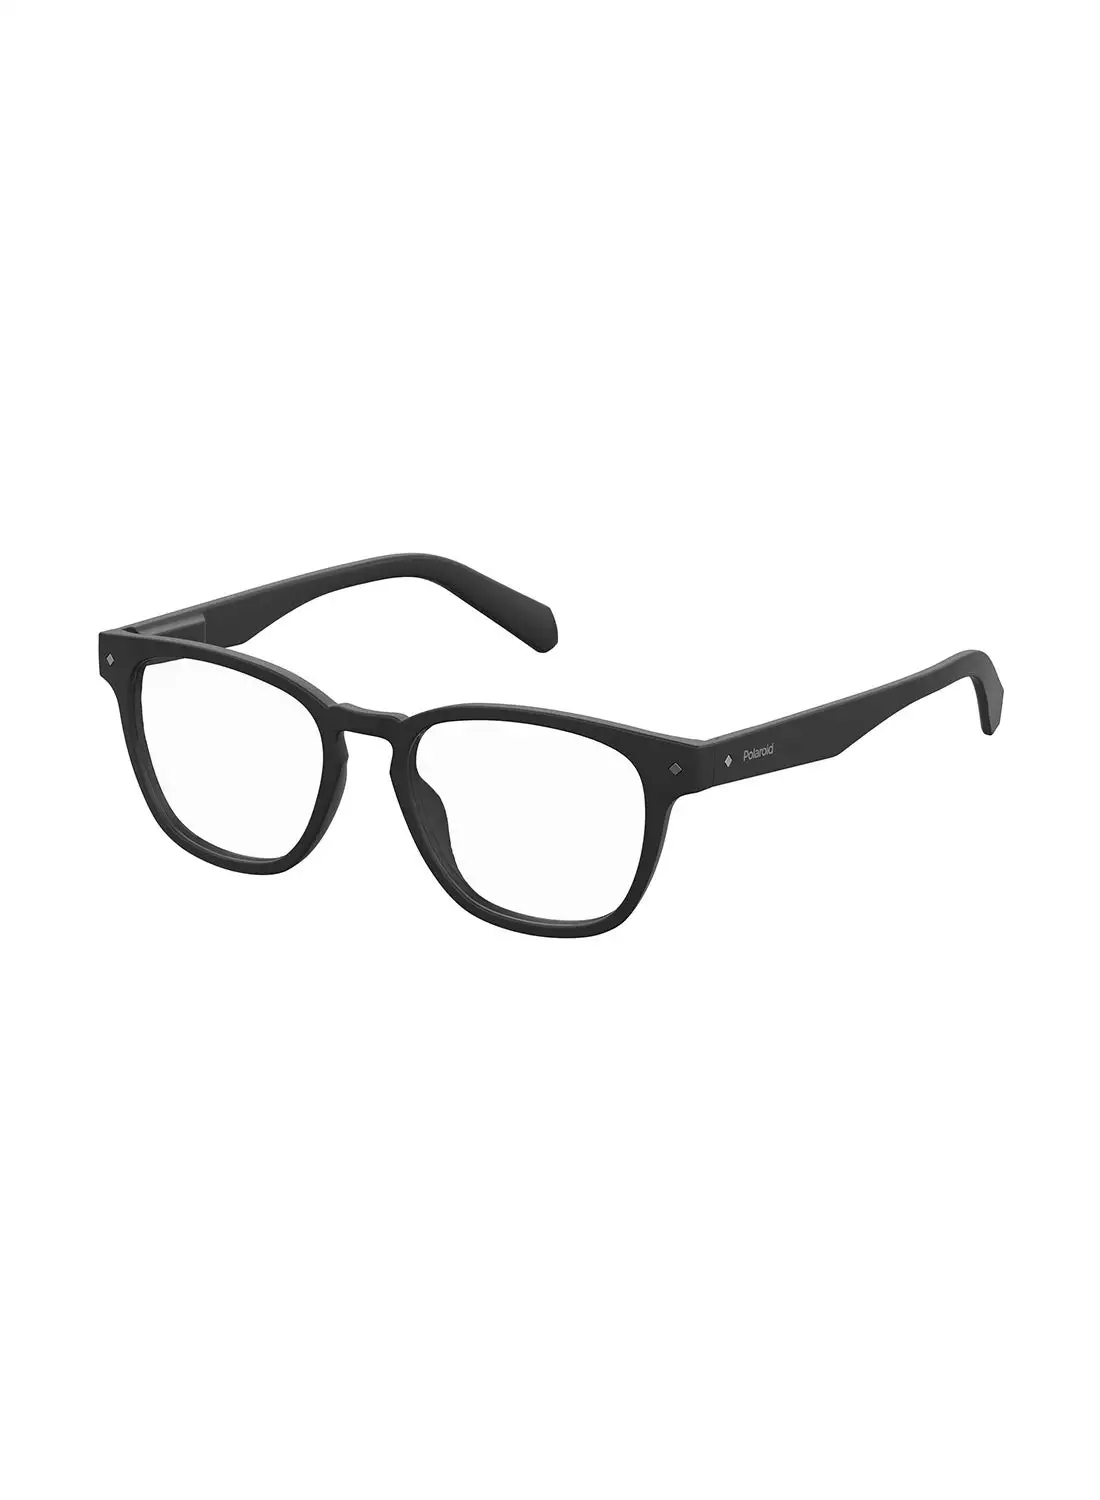 Polaroid Unisex Square Reading Glasses - Pld 0022/R Black 5 - Lens Size: 50 Mm